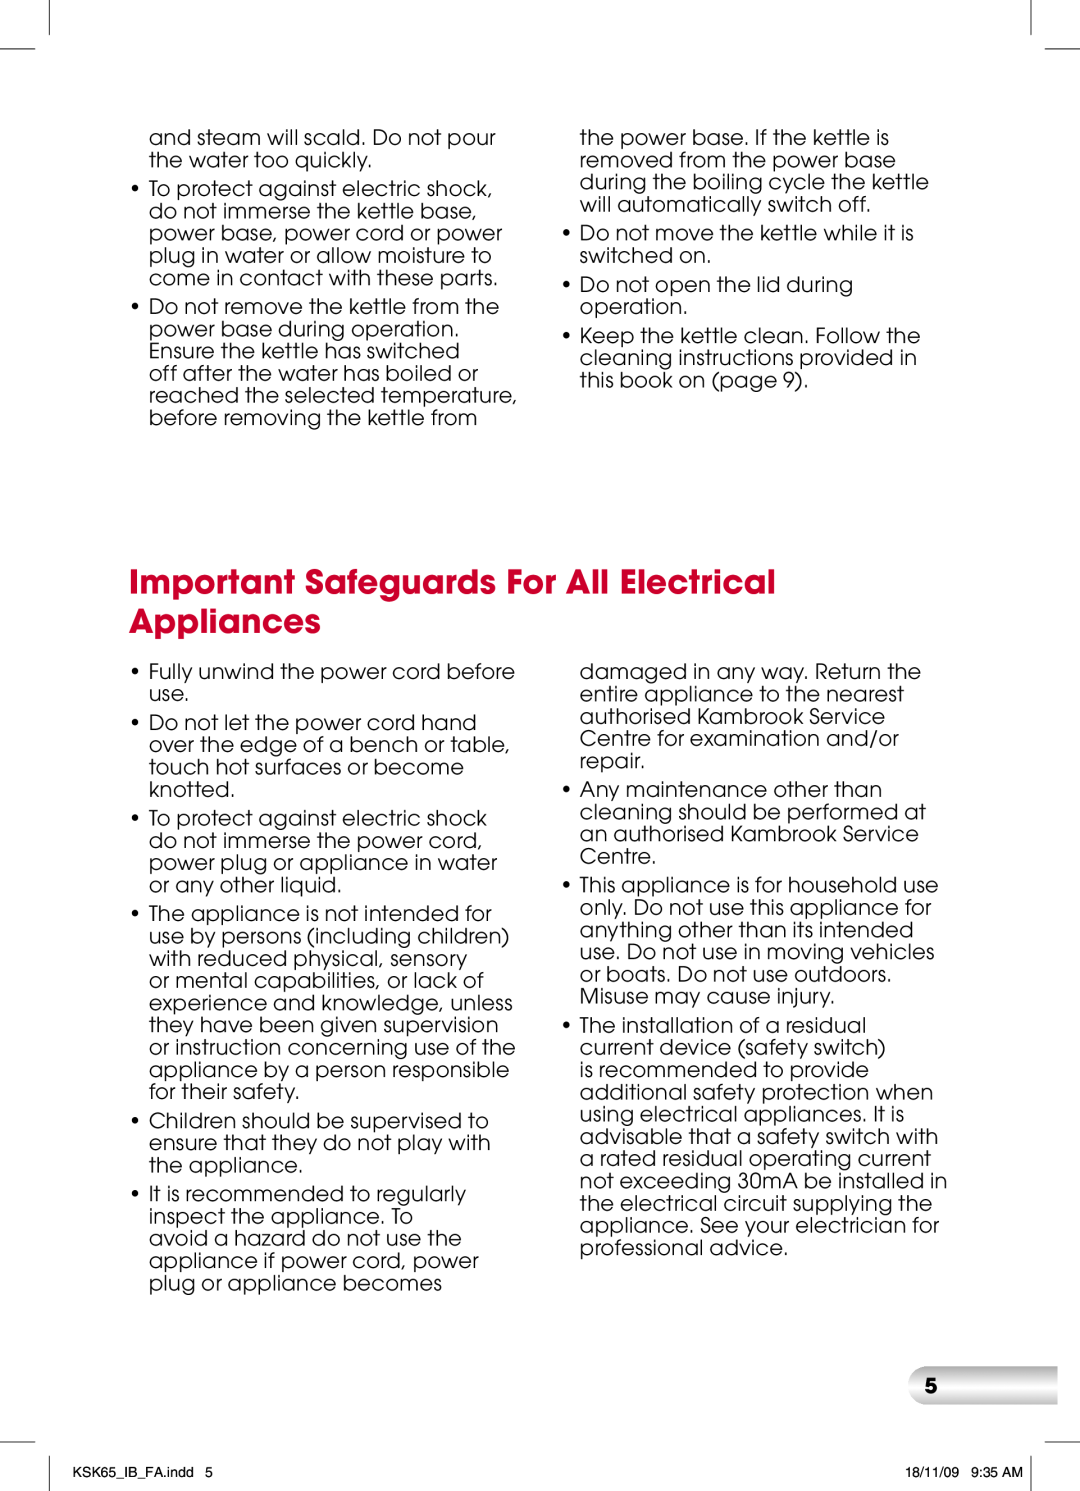 Kambrook KSK65 manual Important Safeguards For All Electrical Appliances 